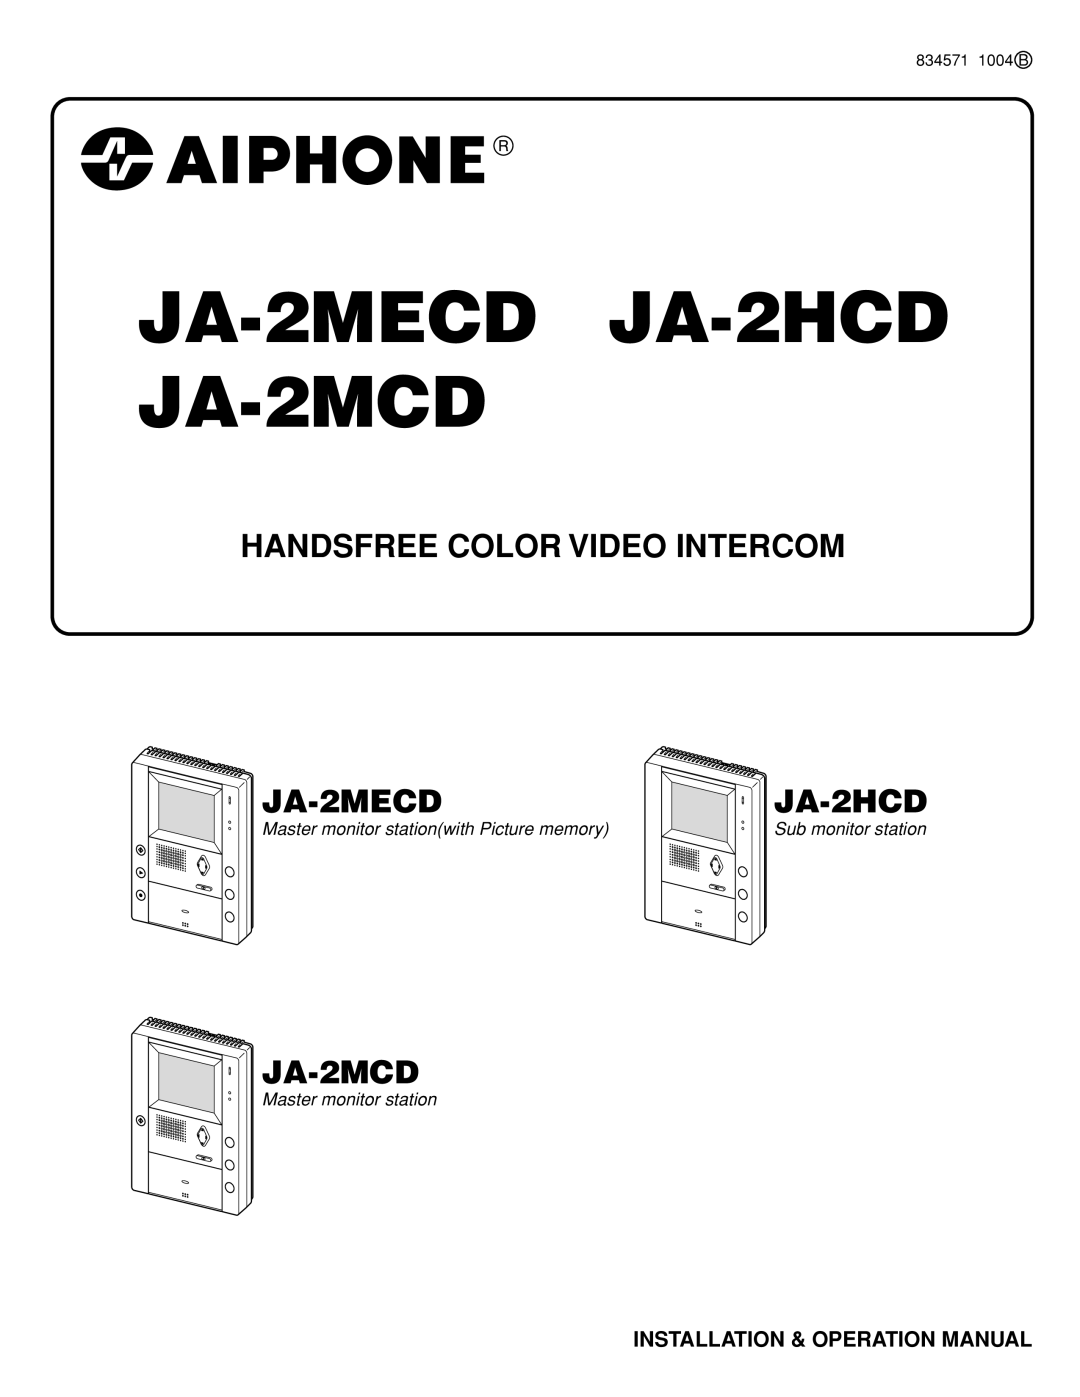 Aiphone operation manual HANDSFREE COLOR VIDEO INTERCOM JA-2MECDJA-2HCD, JA-2MCD, Sub monitor station, 834571 1004 B 